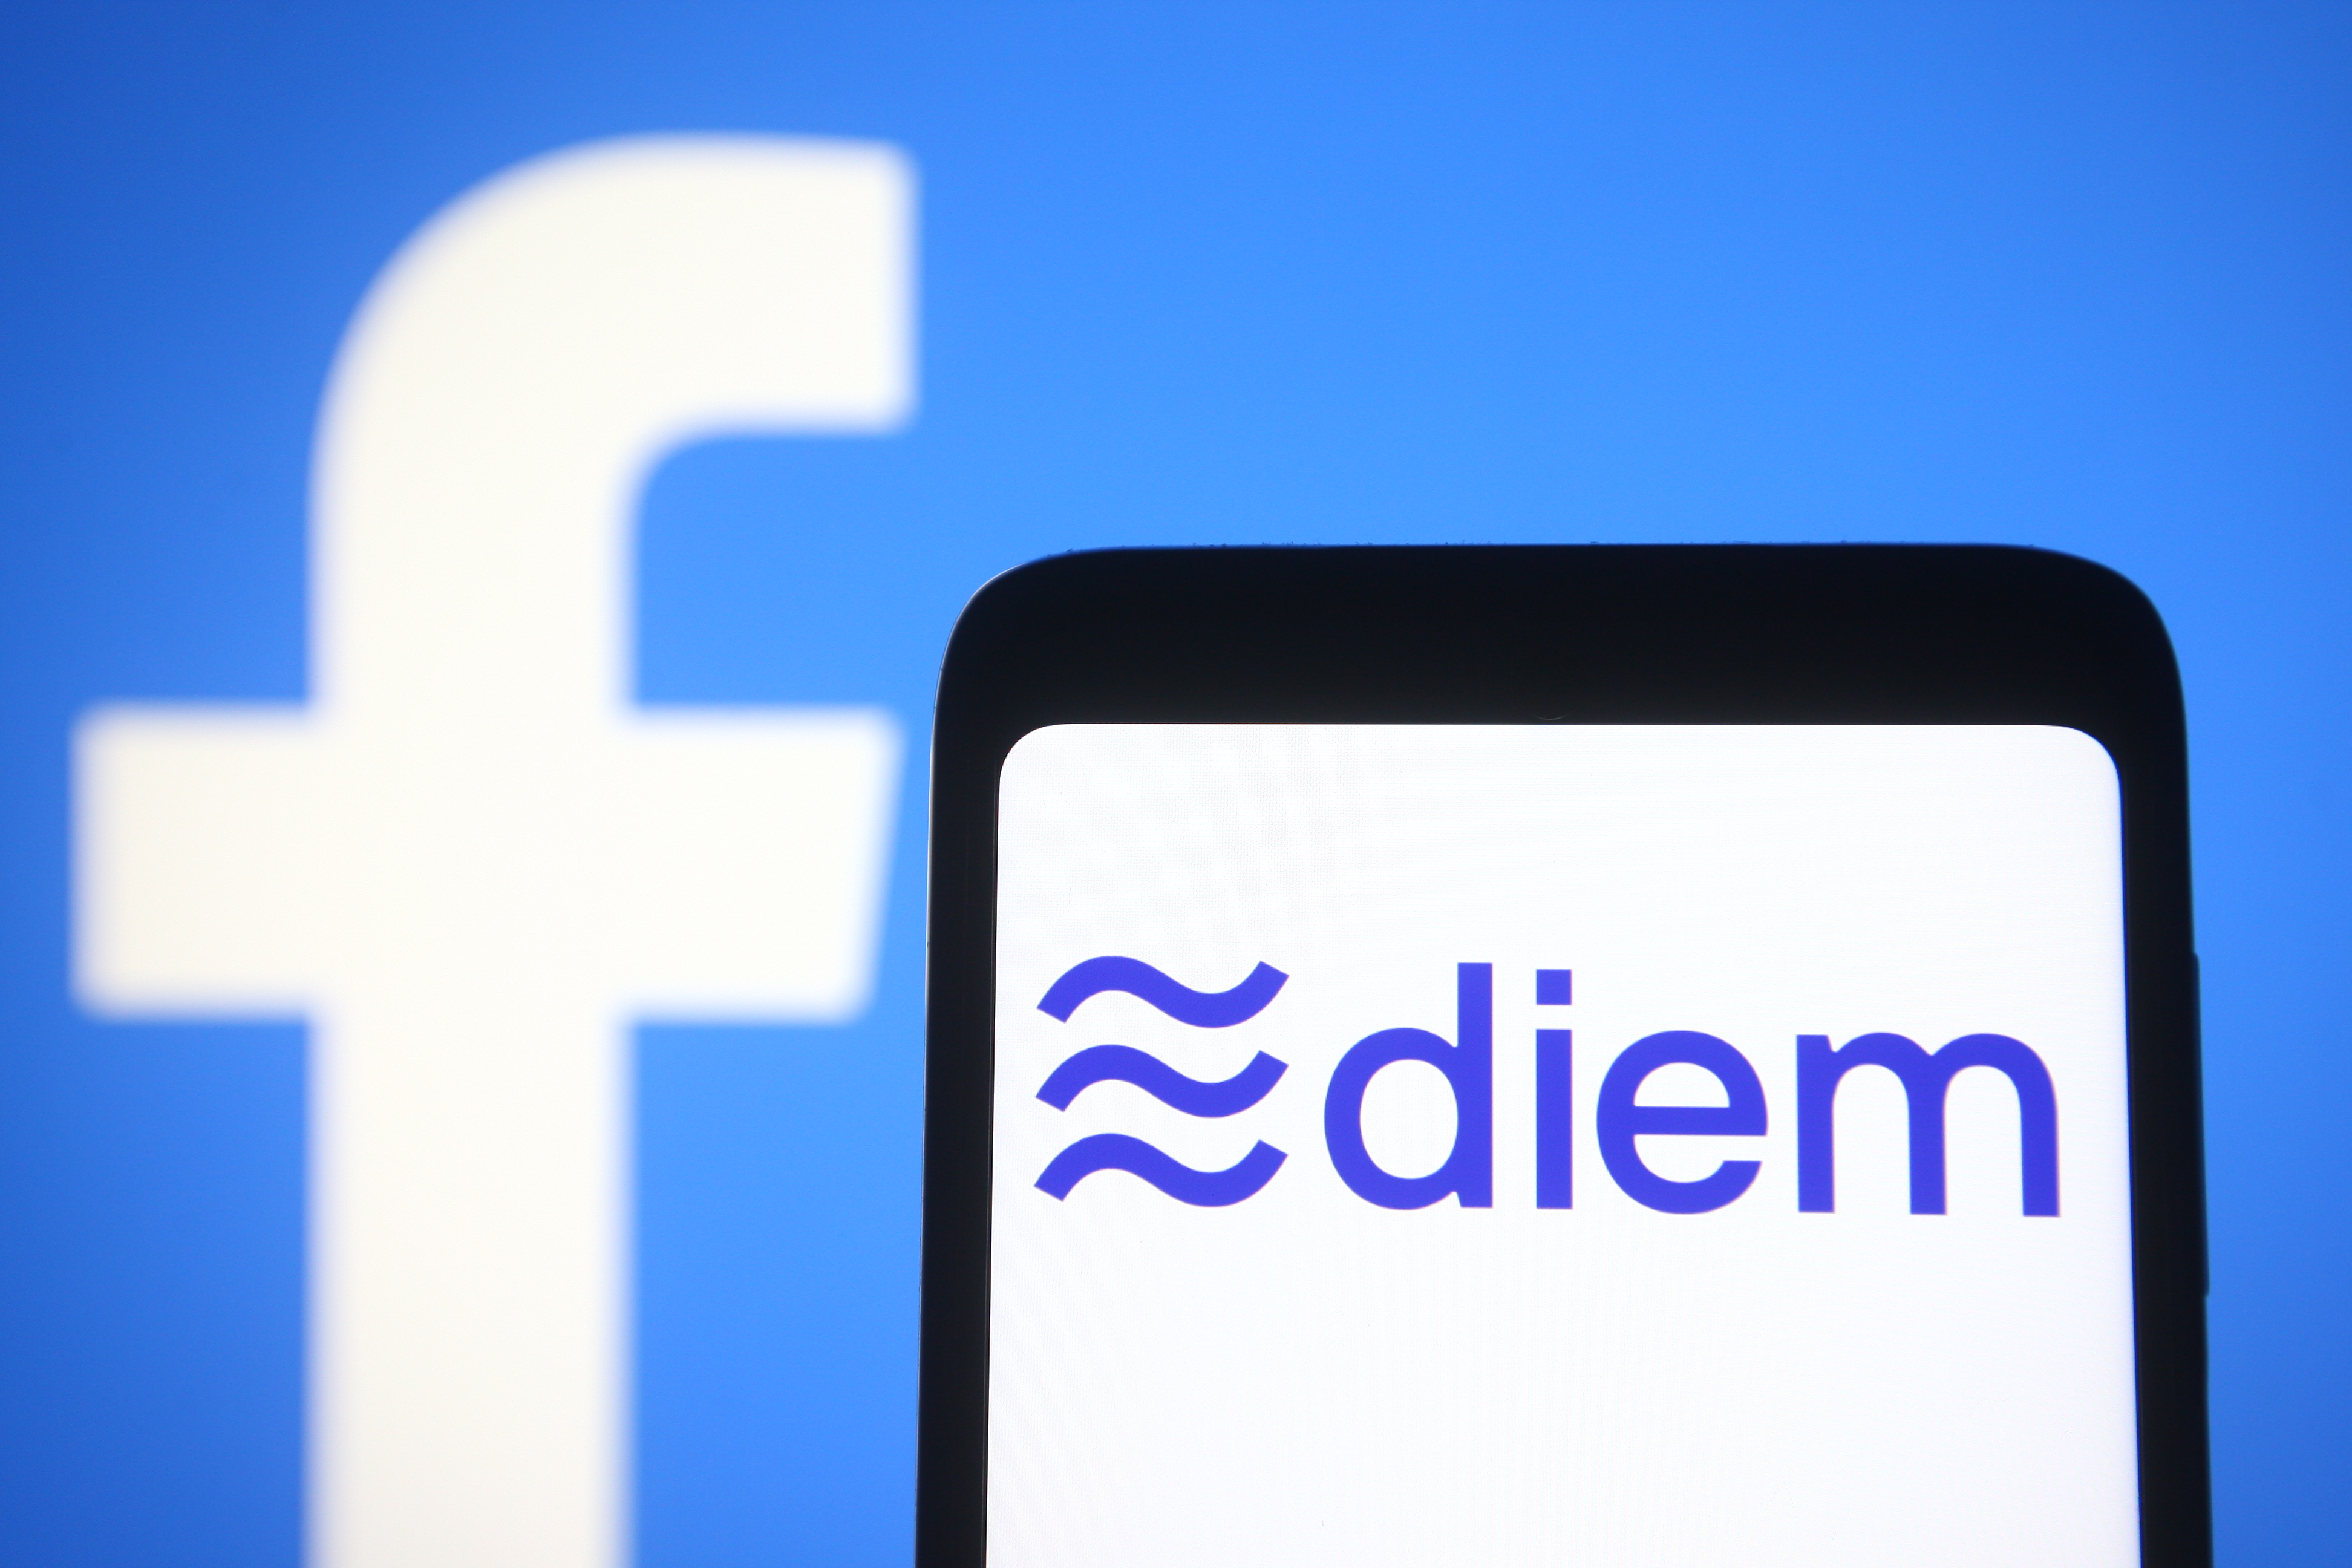 Facebook-backed Diem Association confirms it's 'winding down' thumbnail